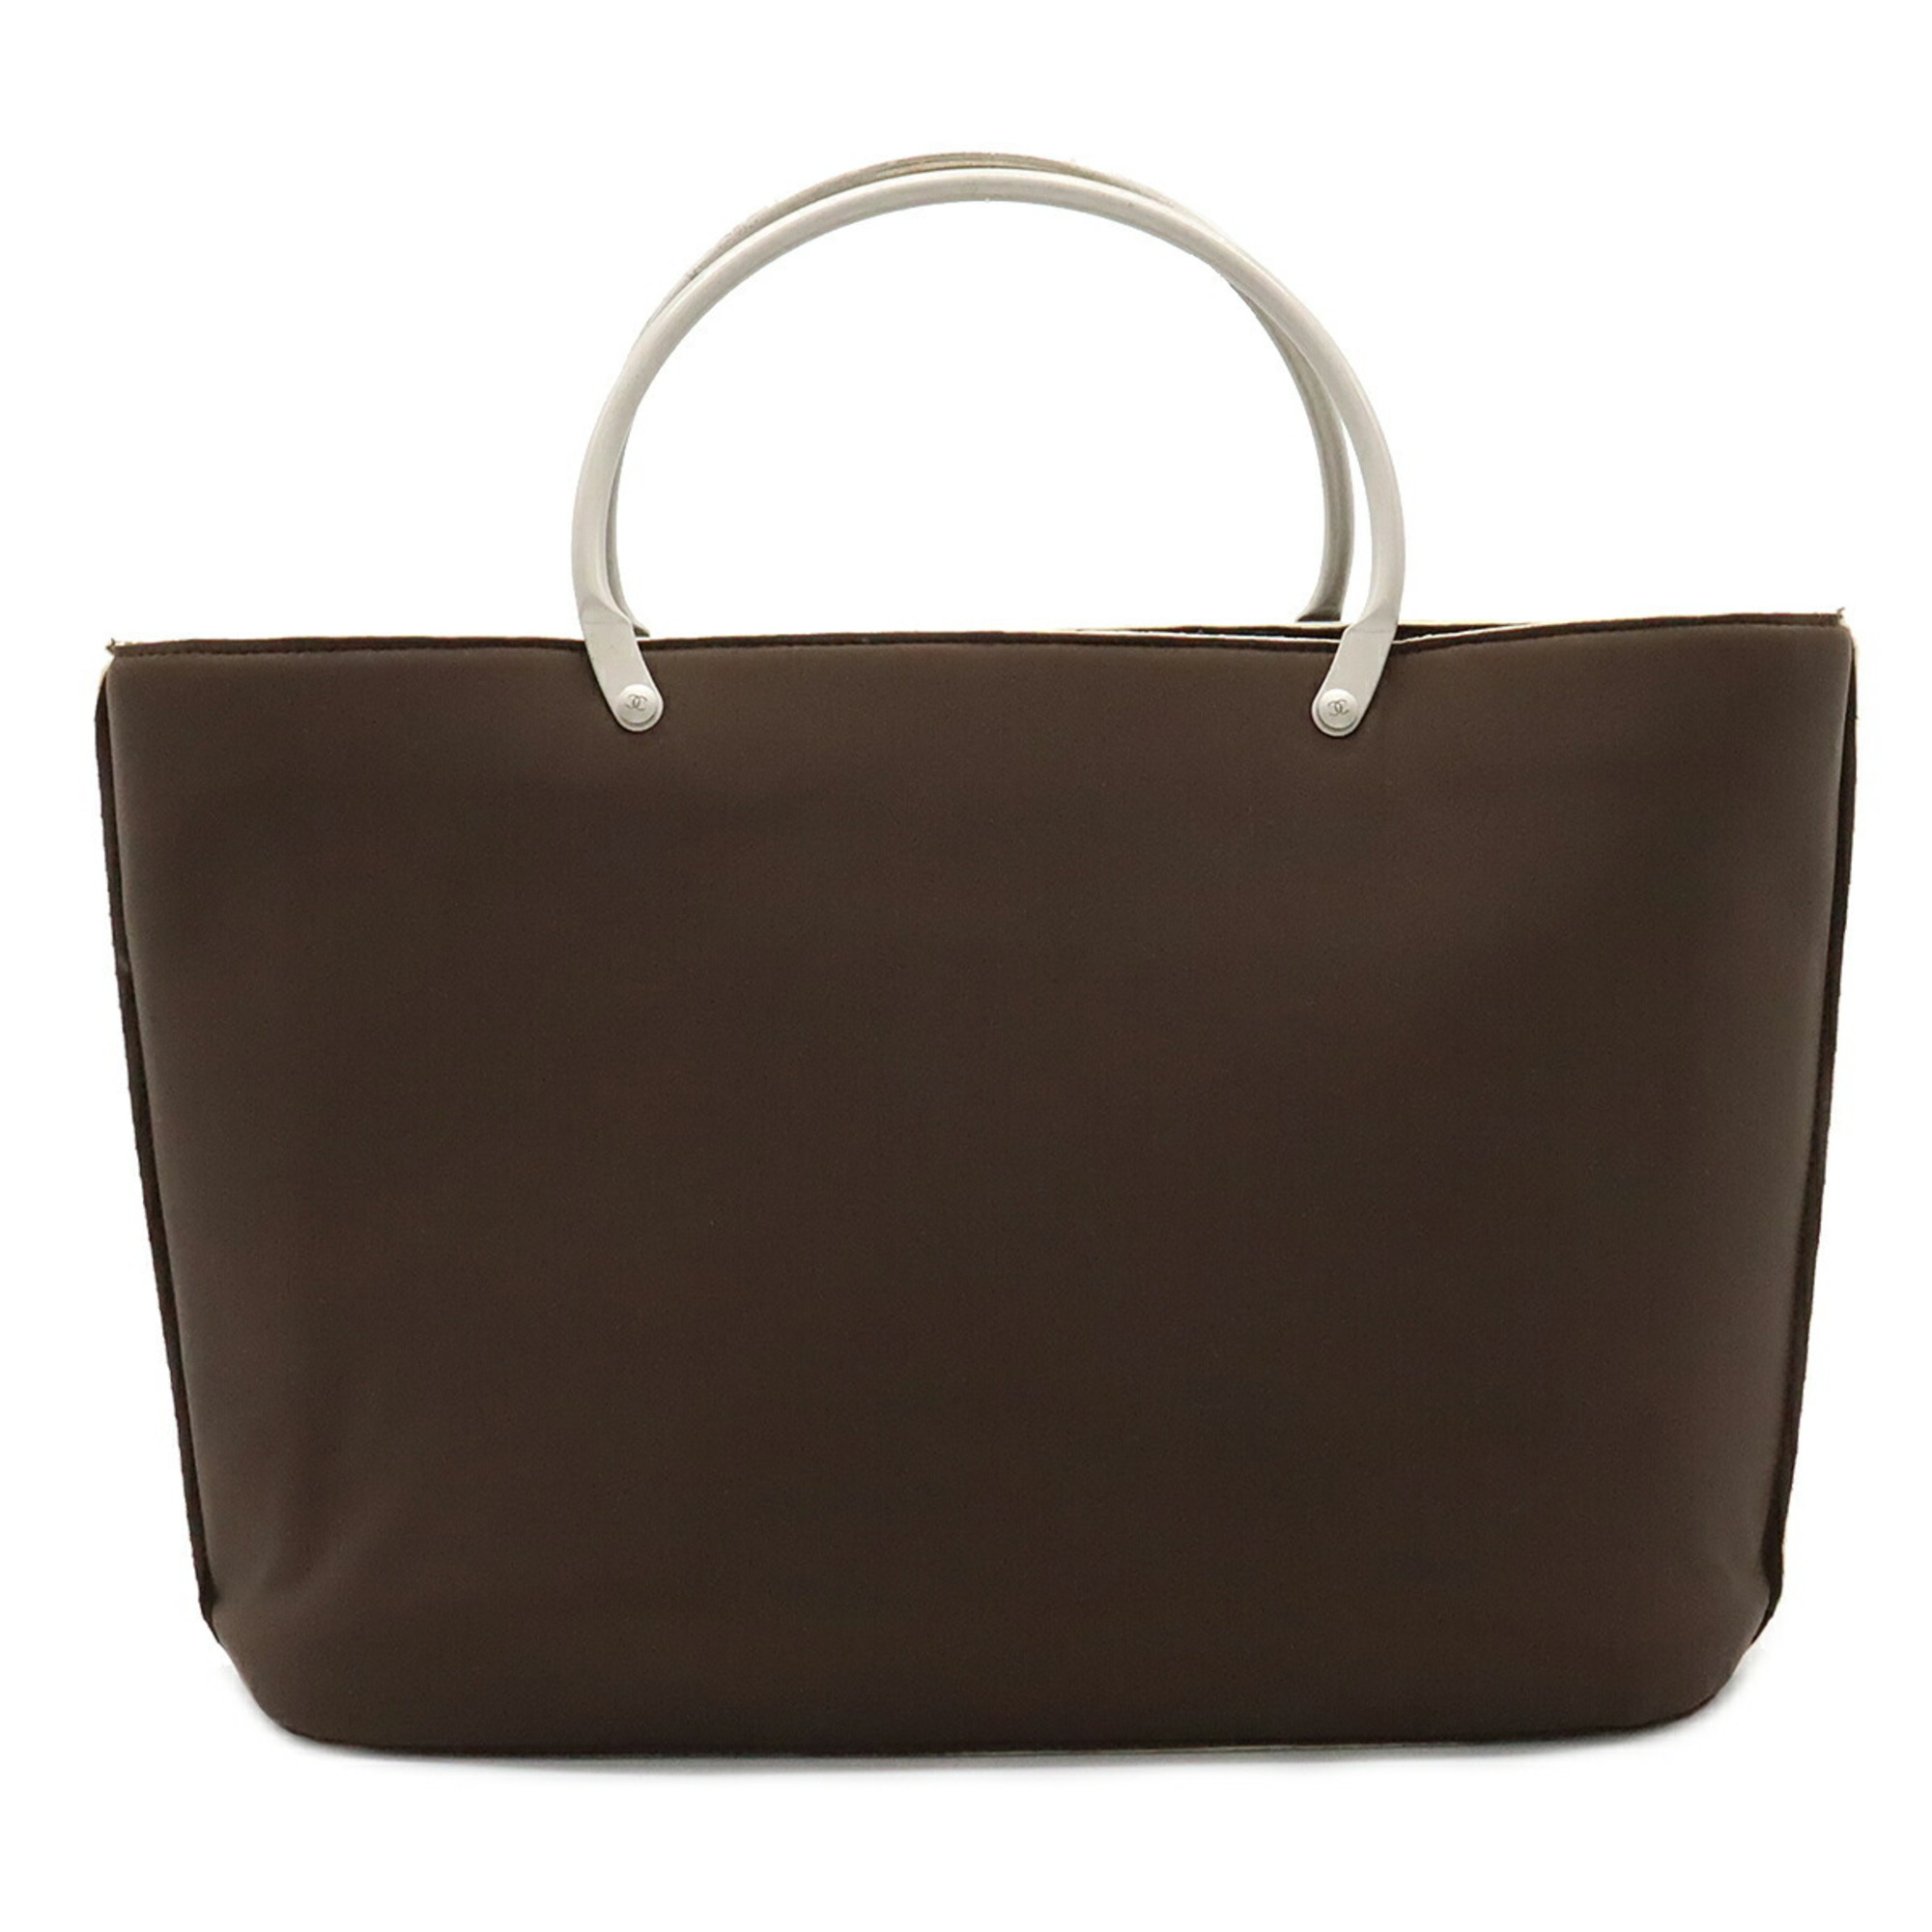 CHANEL Handbag Tote Bag Polyurethane Dark Brown